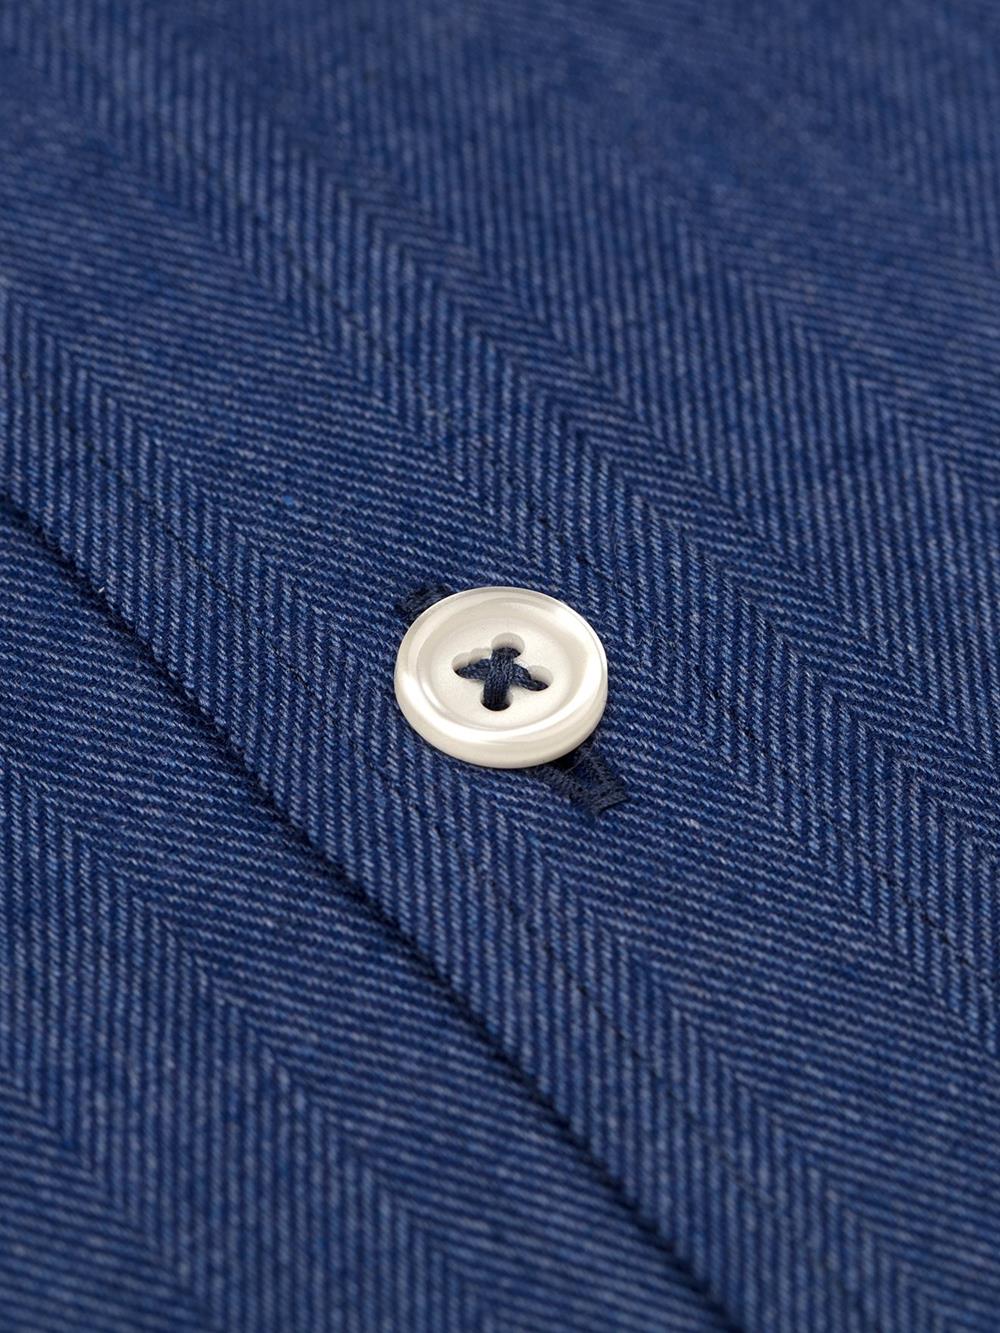 Hall indigo flannel shirt - Button-down collar